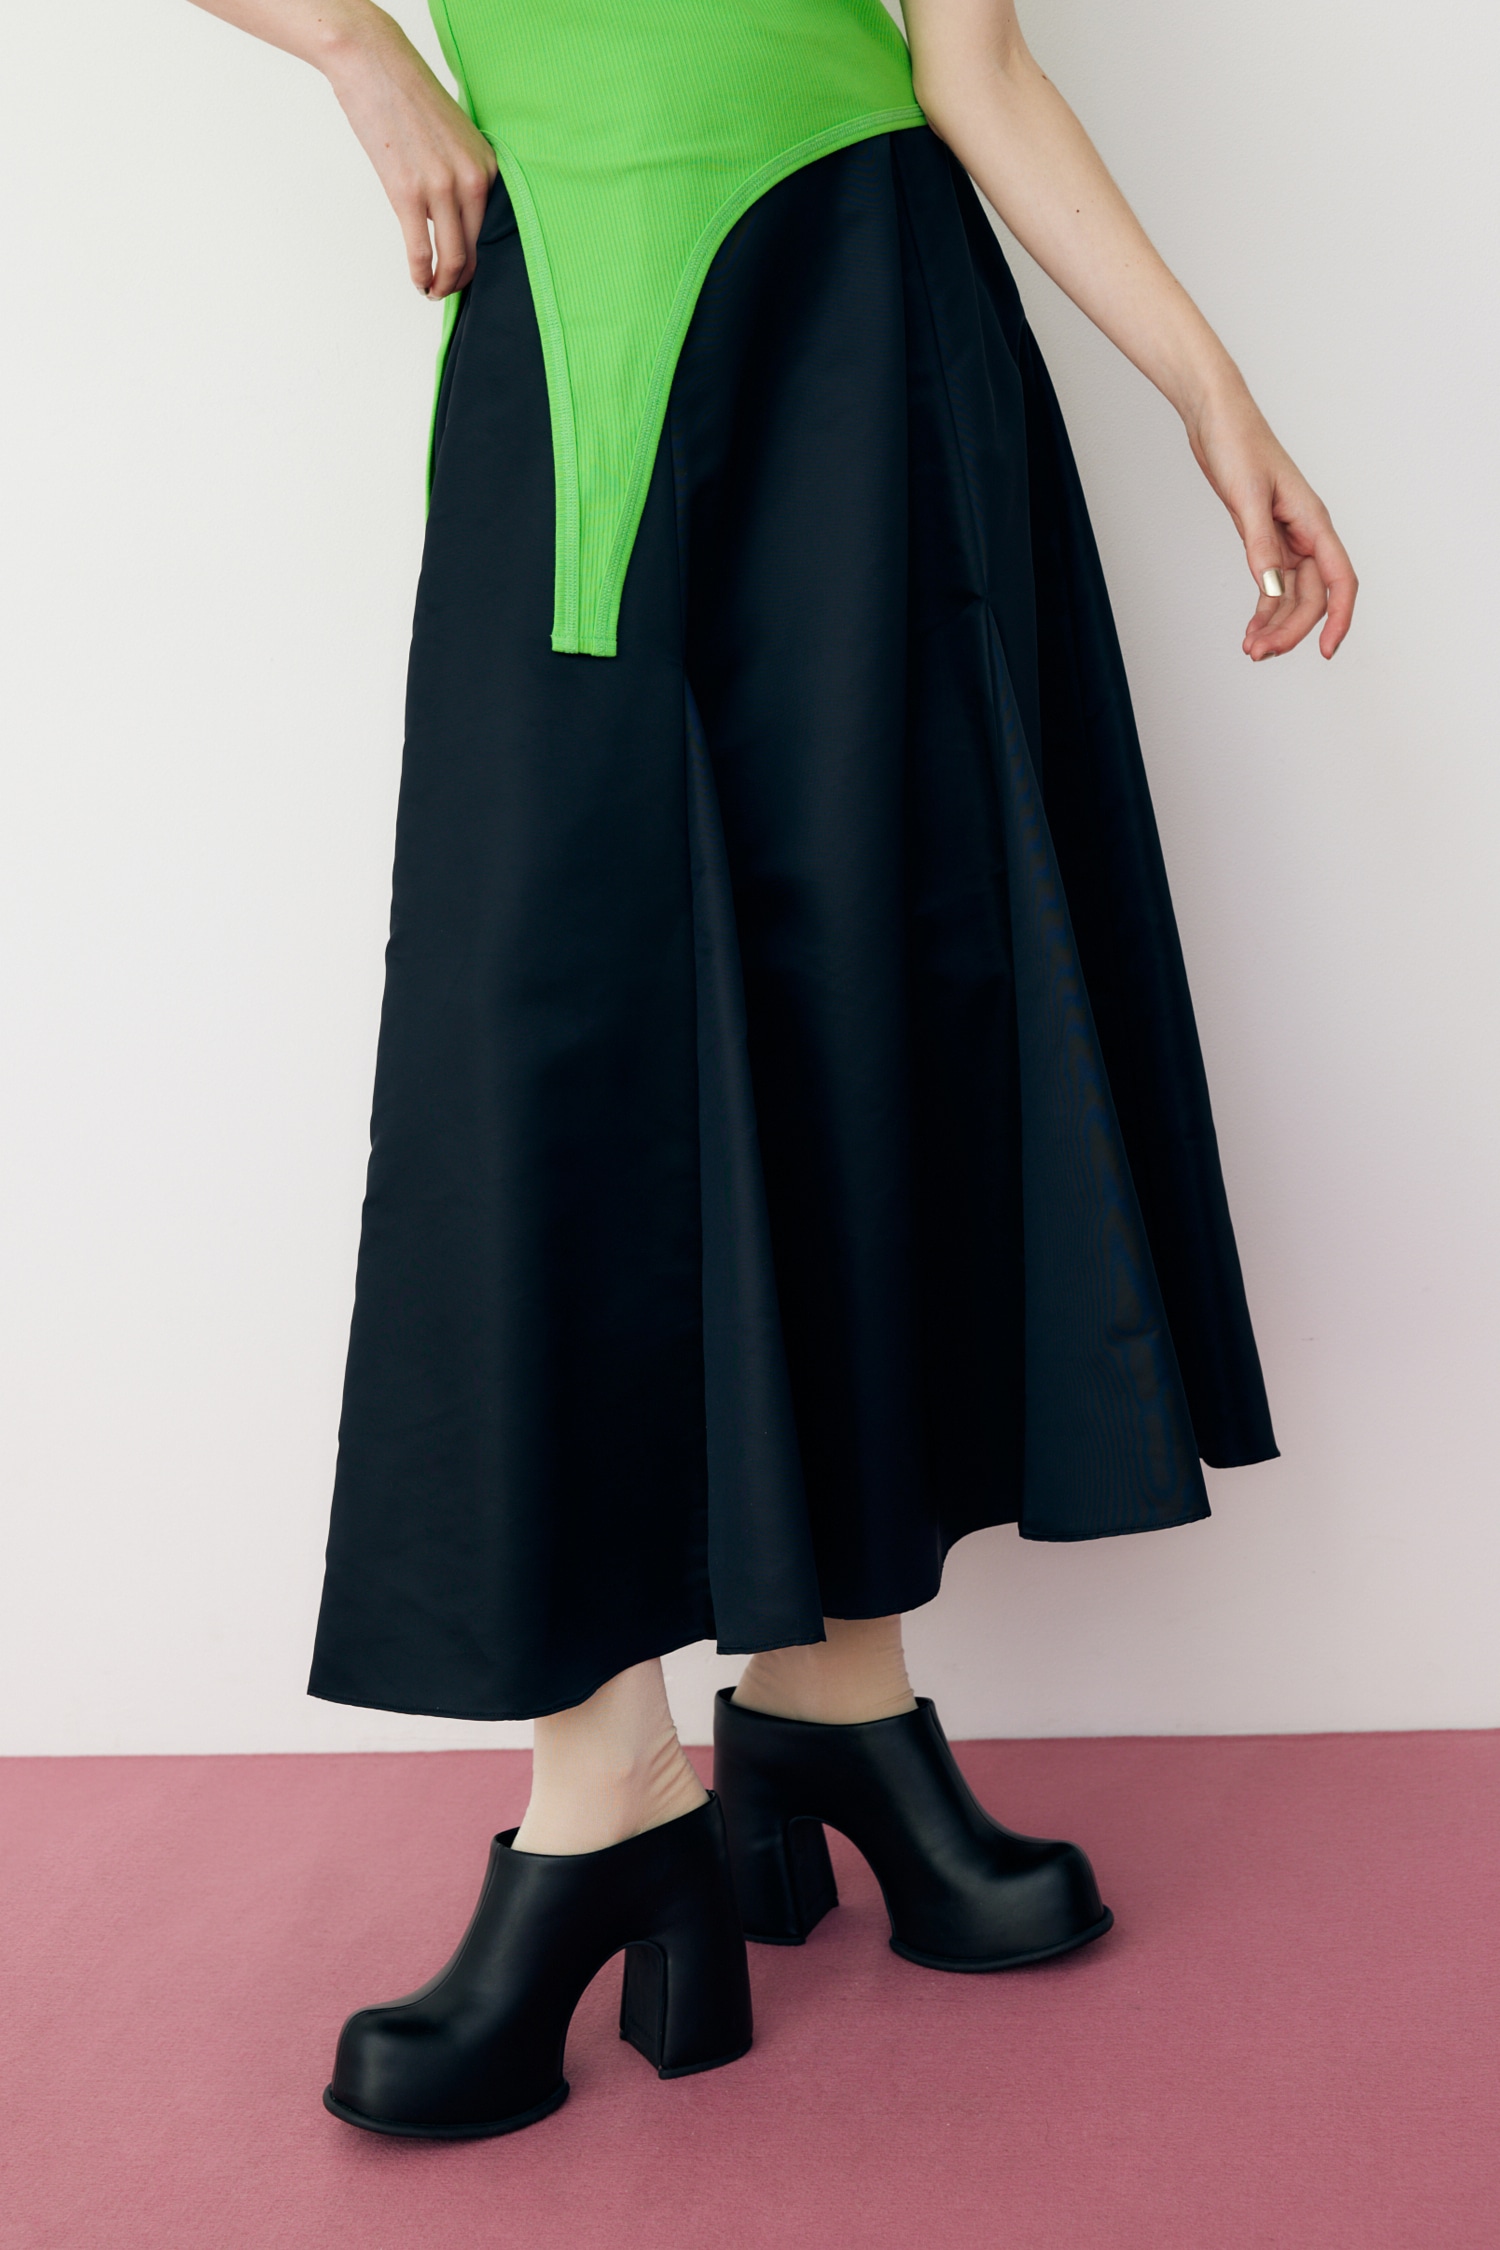 HeRIN.CYE | Nylon maxi skirt (スカート(ロング) ) |SHEL'TTER WEBSTORE